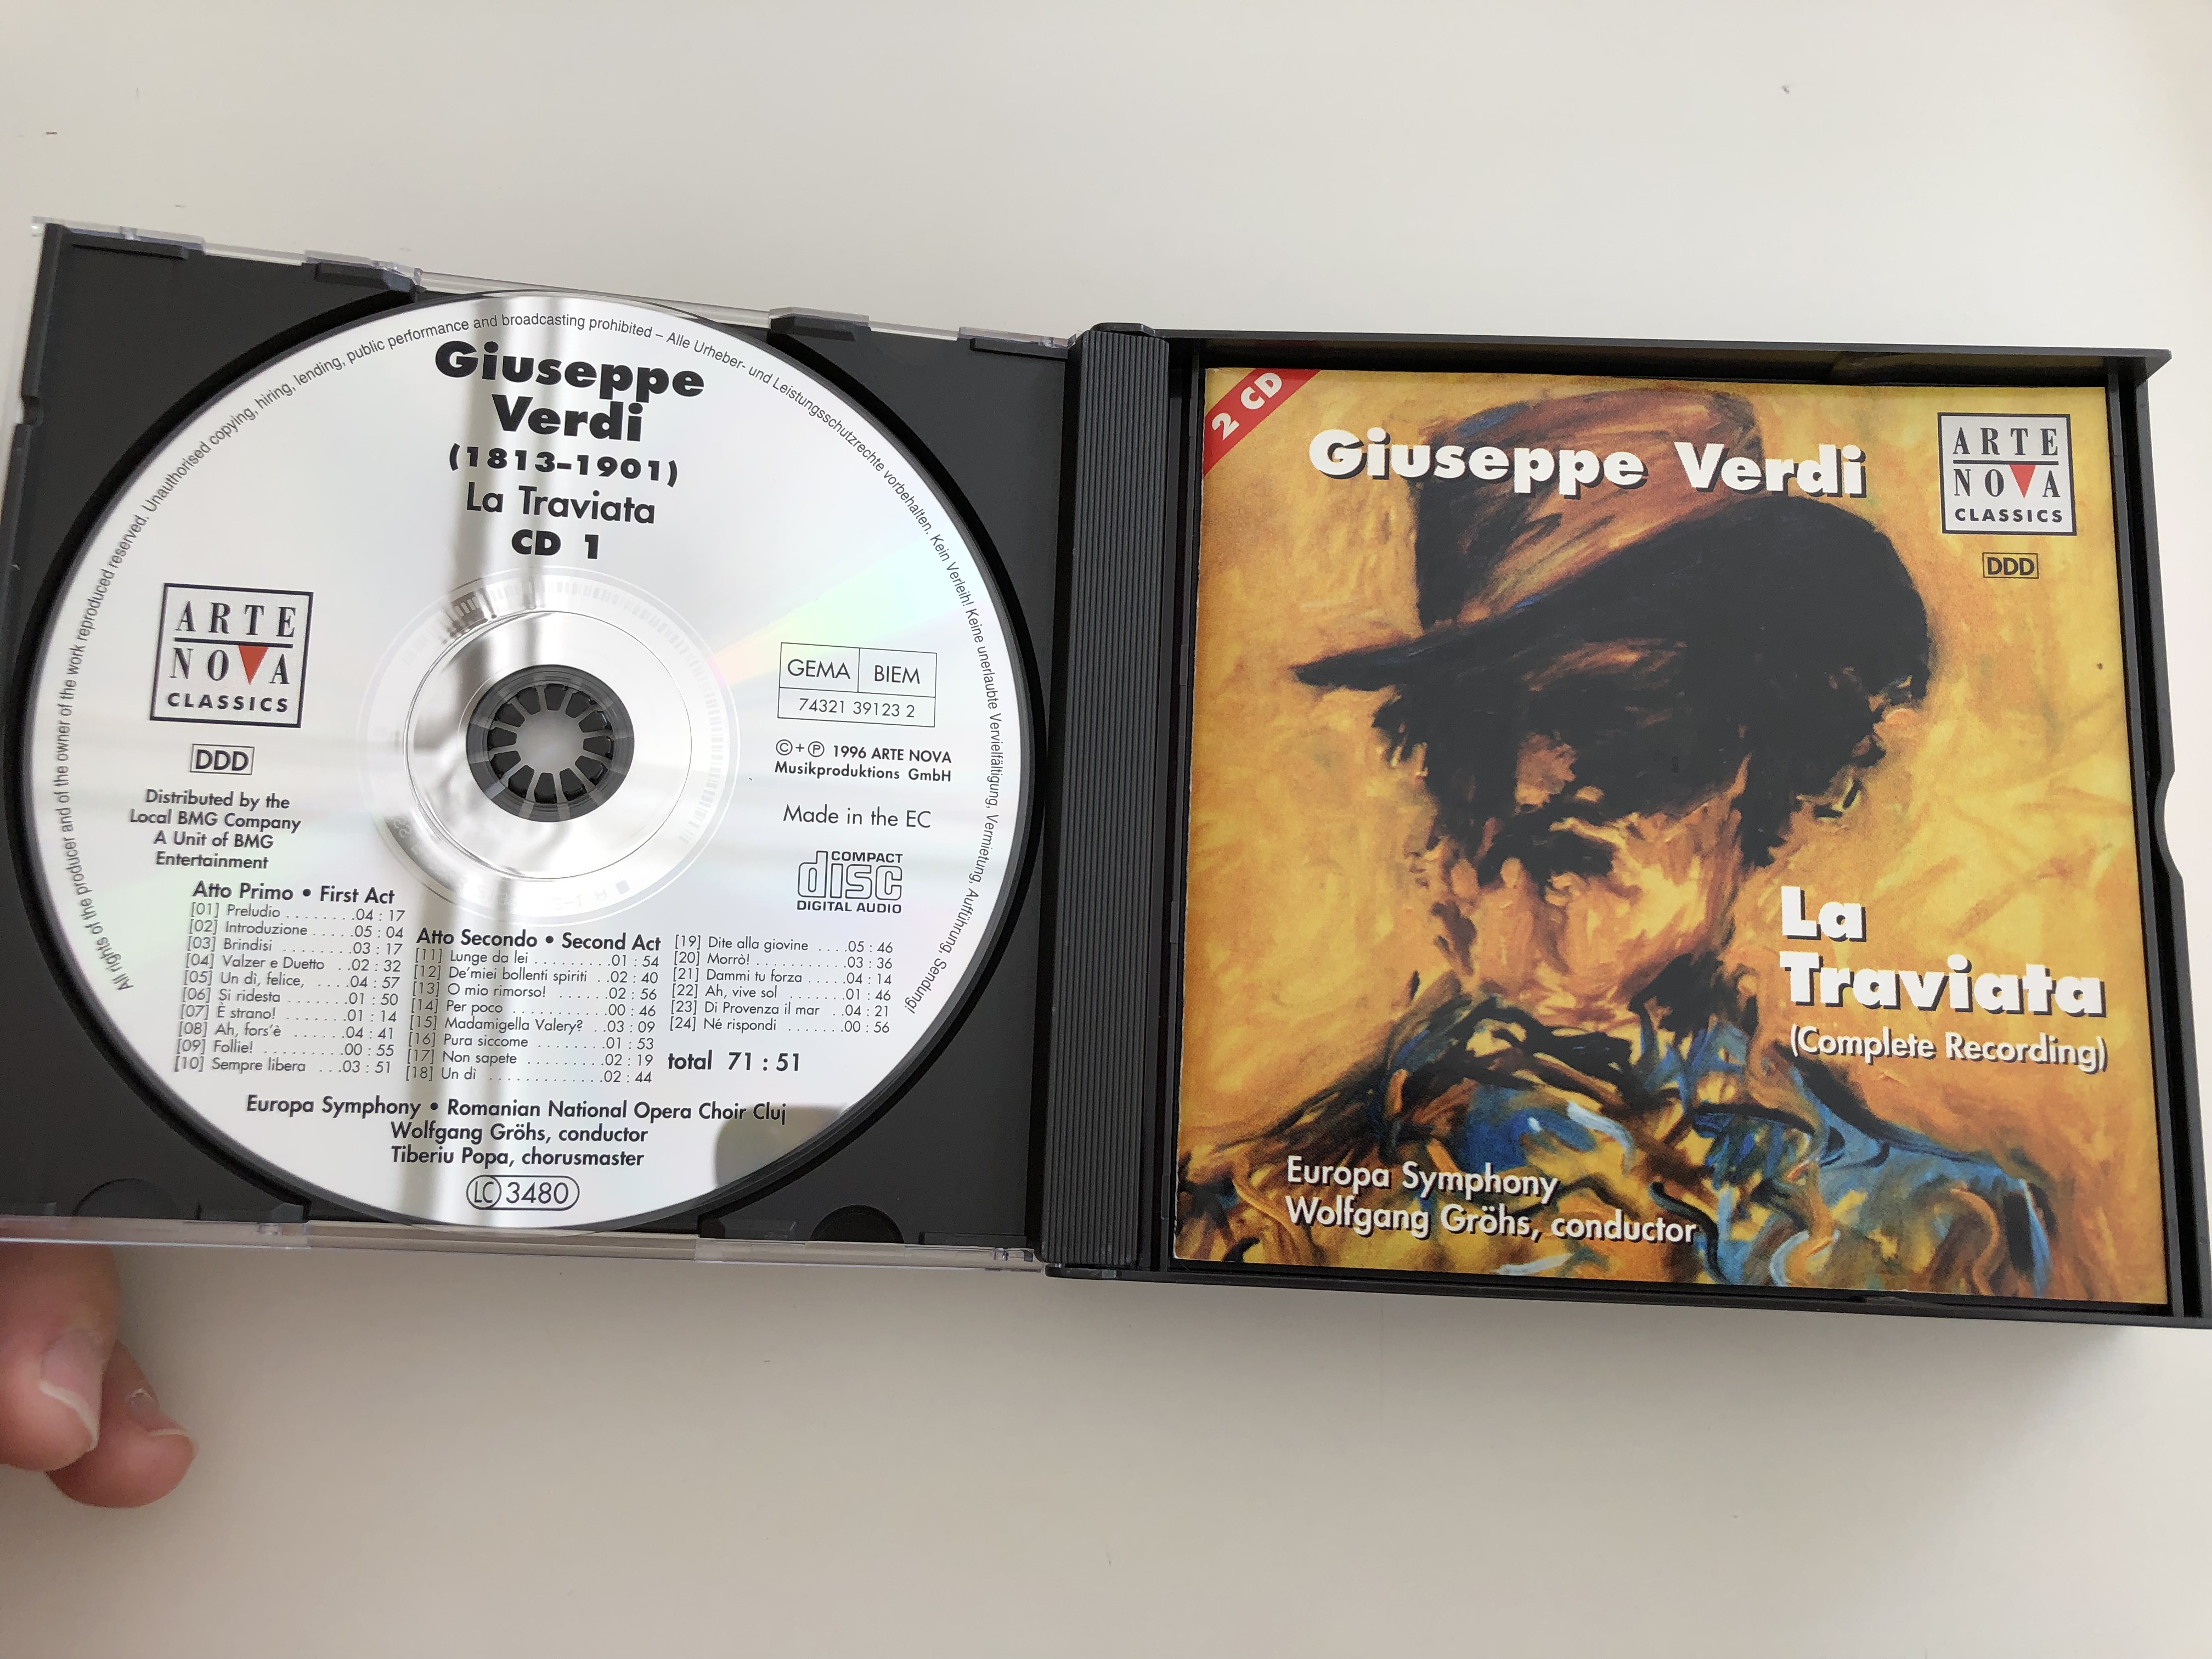 giuseppe-verdi-la-traviata-2-cd-europa-symphony-wolfgang-gr-hs-conductor-arte-nova-classics-audio-cd-1996-complete-recording-2-.jpg